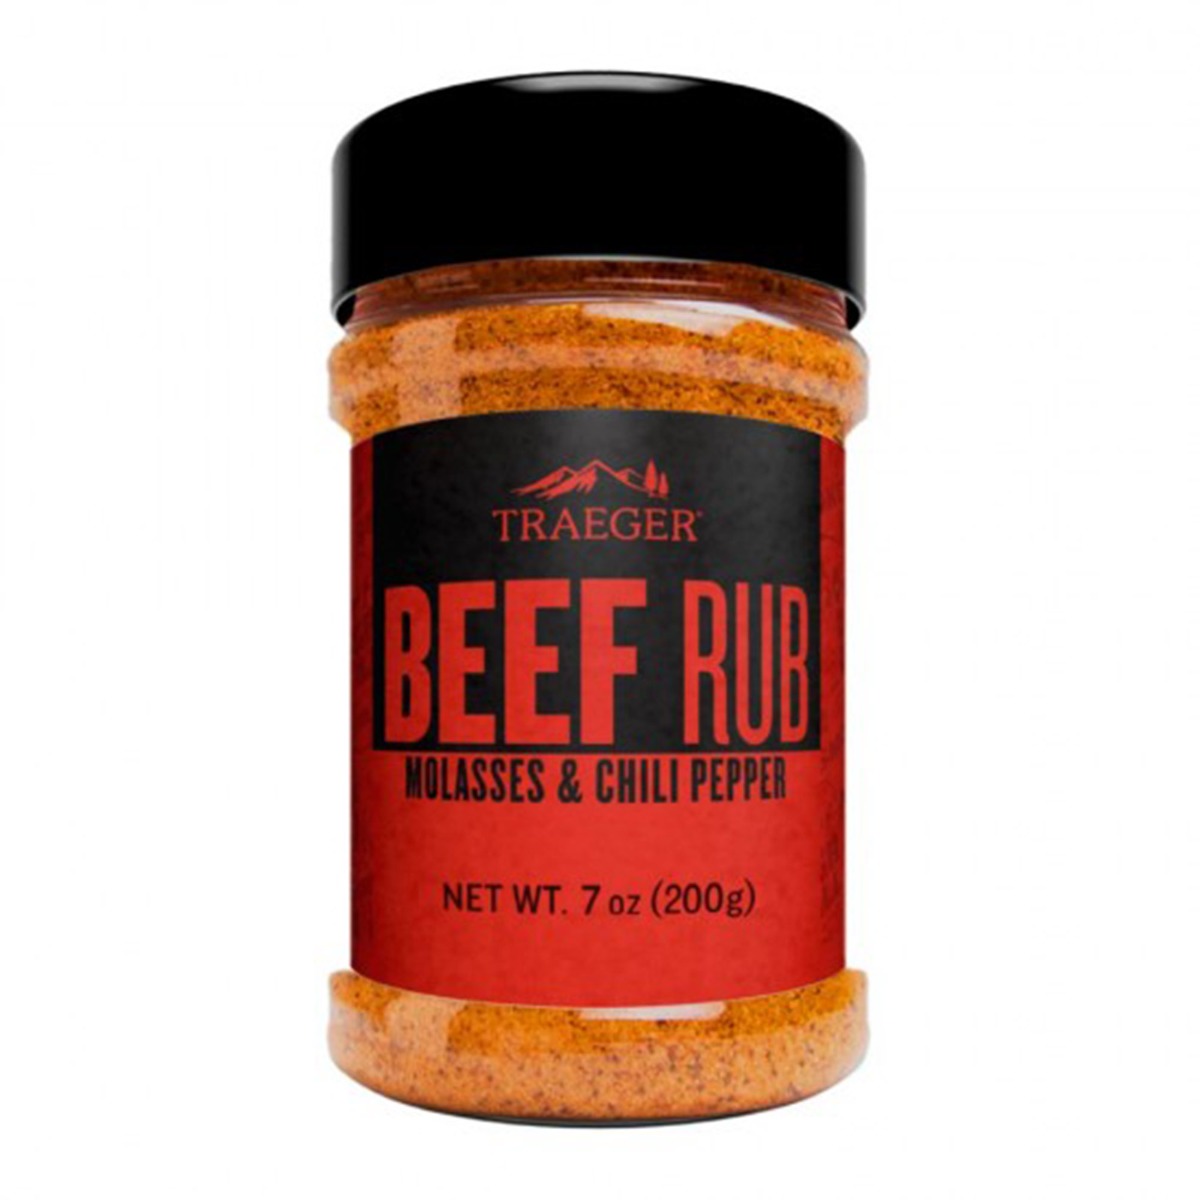 Beef Rub, 200g - Traeger®️